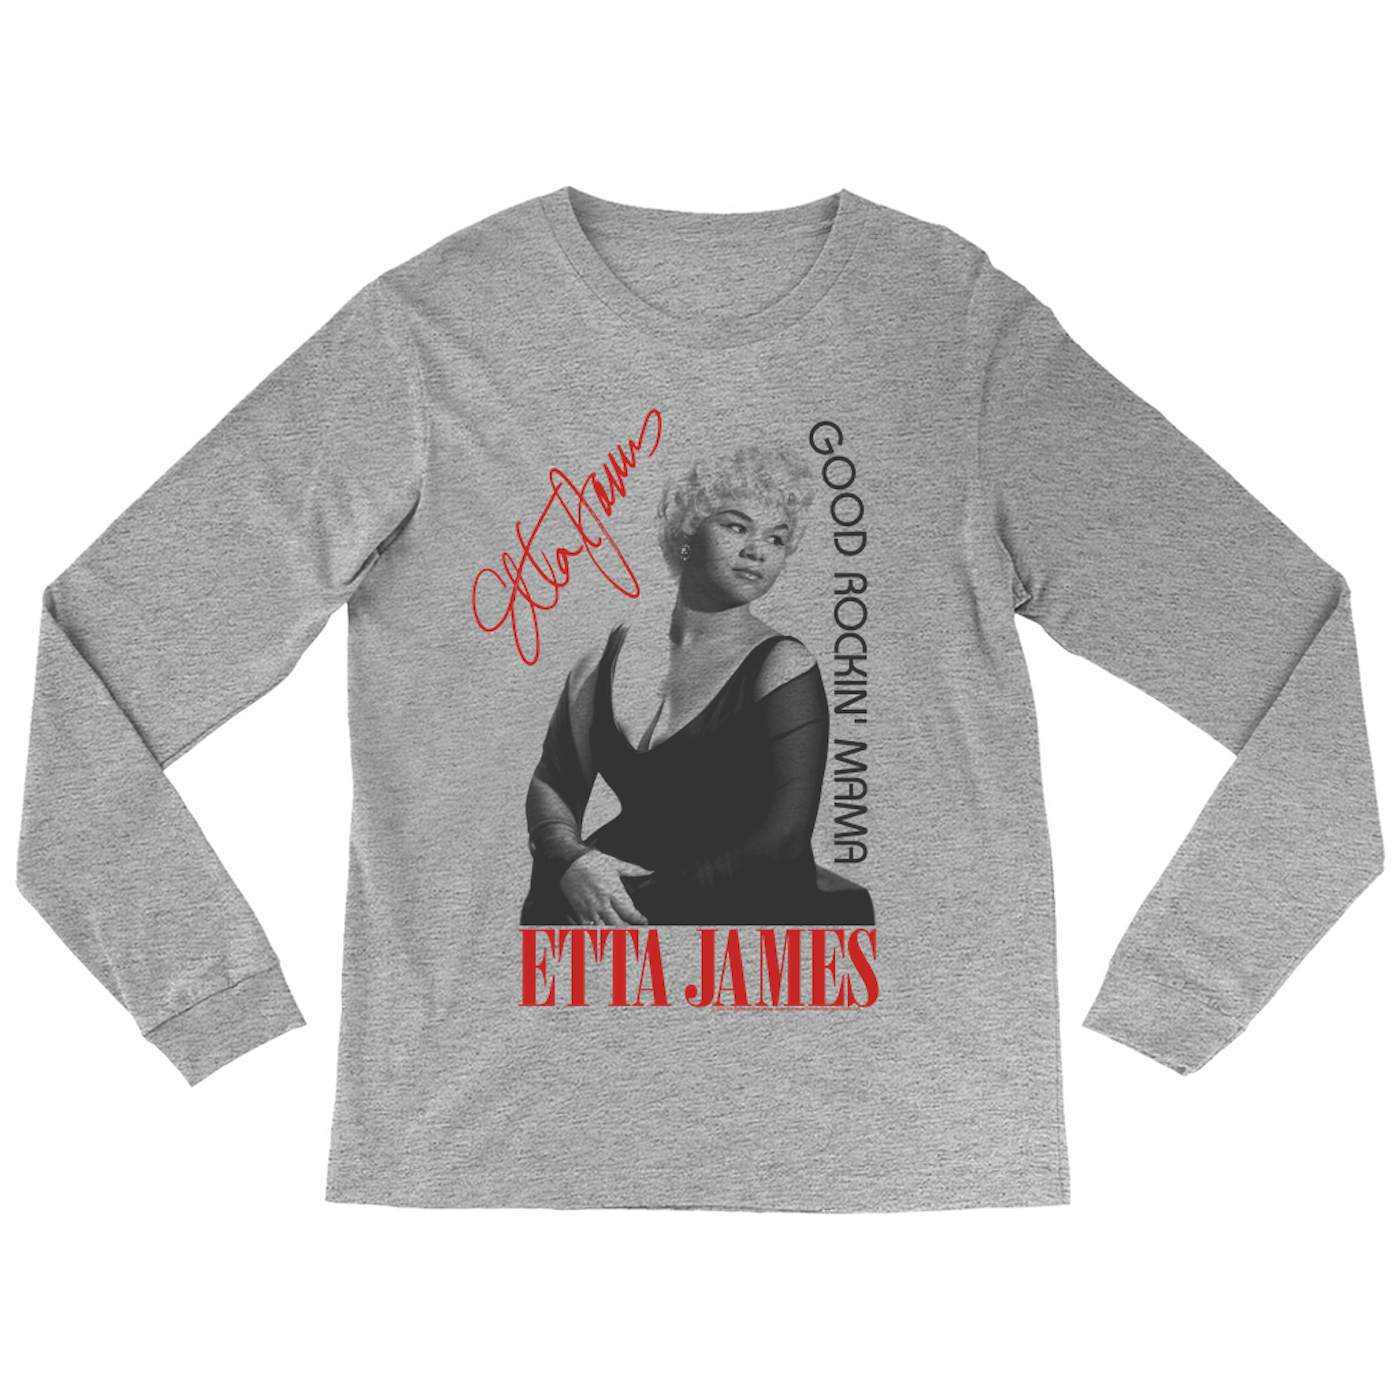 Etta James T-Shirt  Star Power Good Rockin' Mama Etta James Shirt